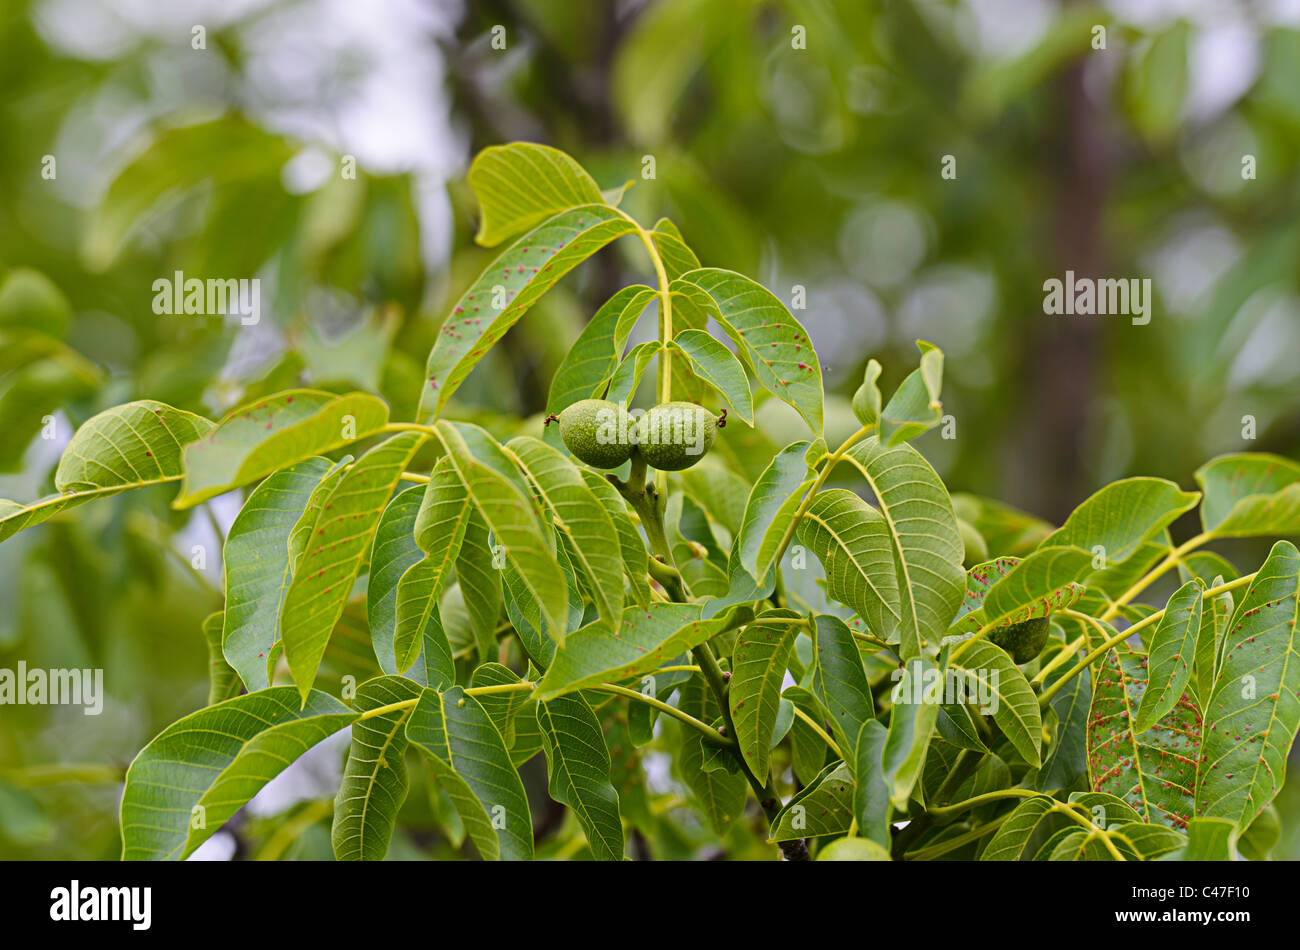 Walnut leaves (Juglans Regia) and walnuts with fungal plant pathogen Gnomonia leptostyla, Marssonina juglandis infection. Stock Photo